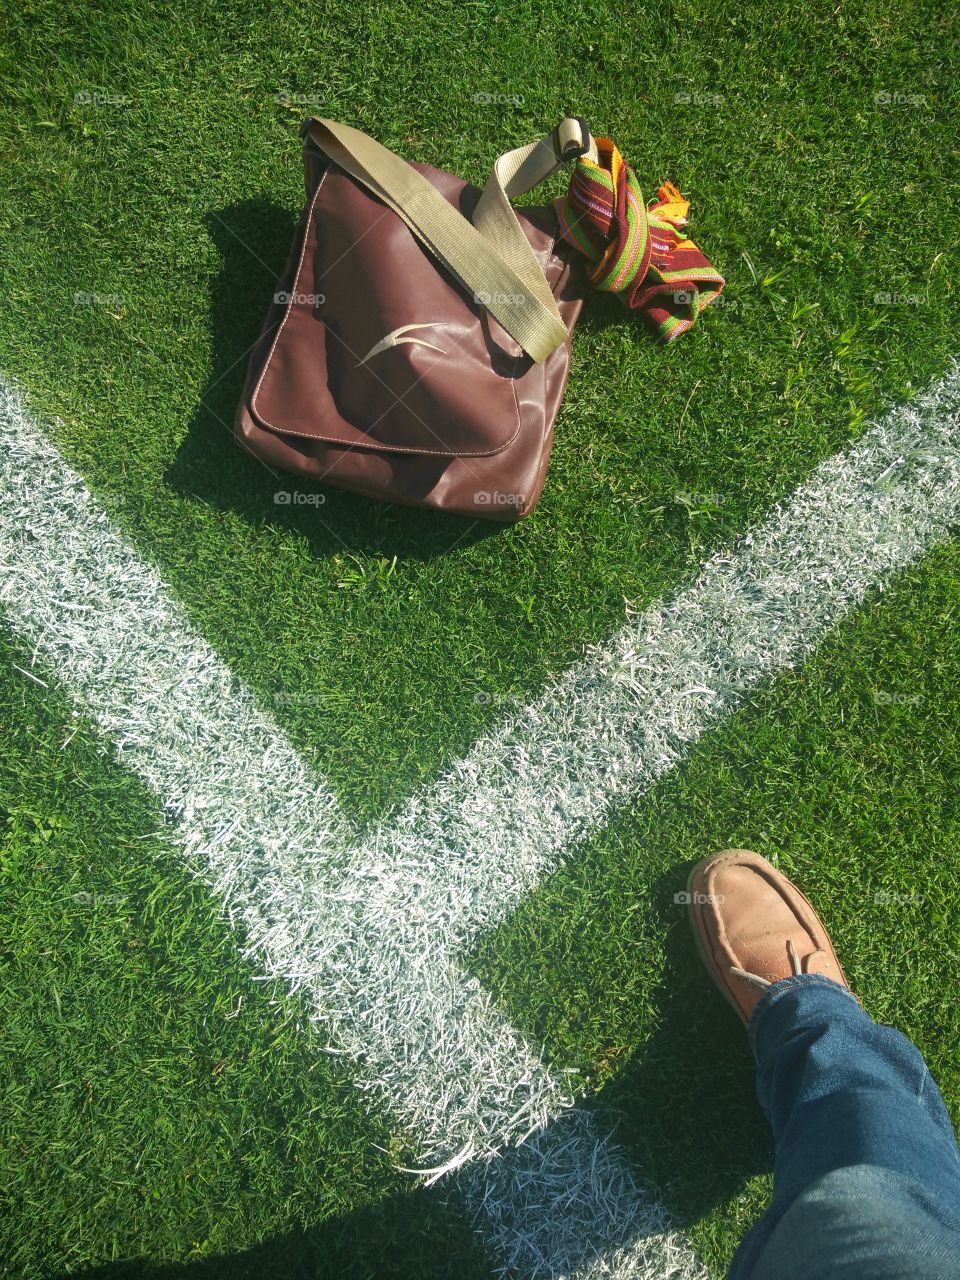 Grass at Mariolonga Stadion 😂